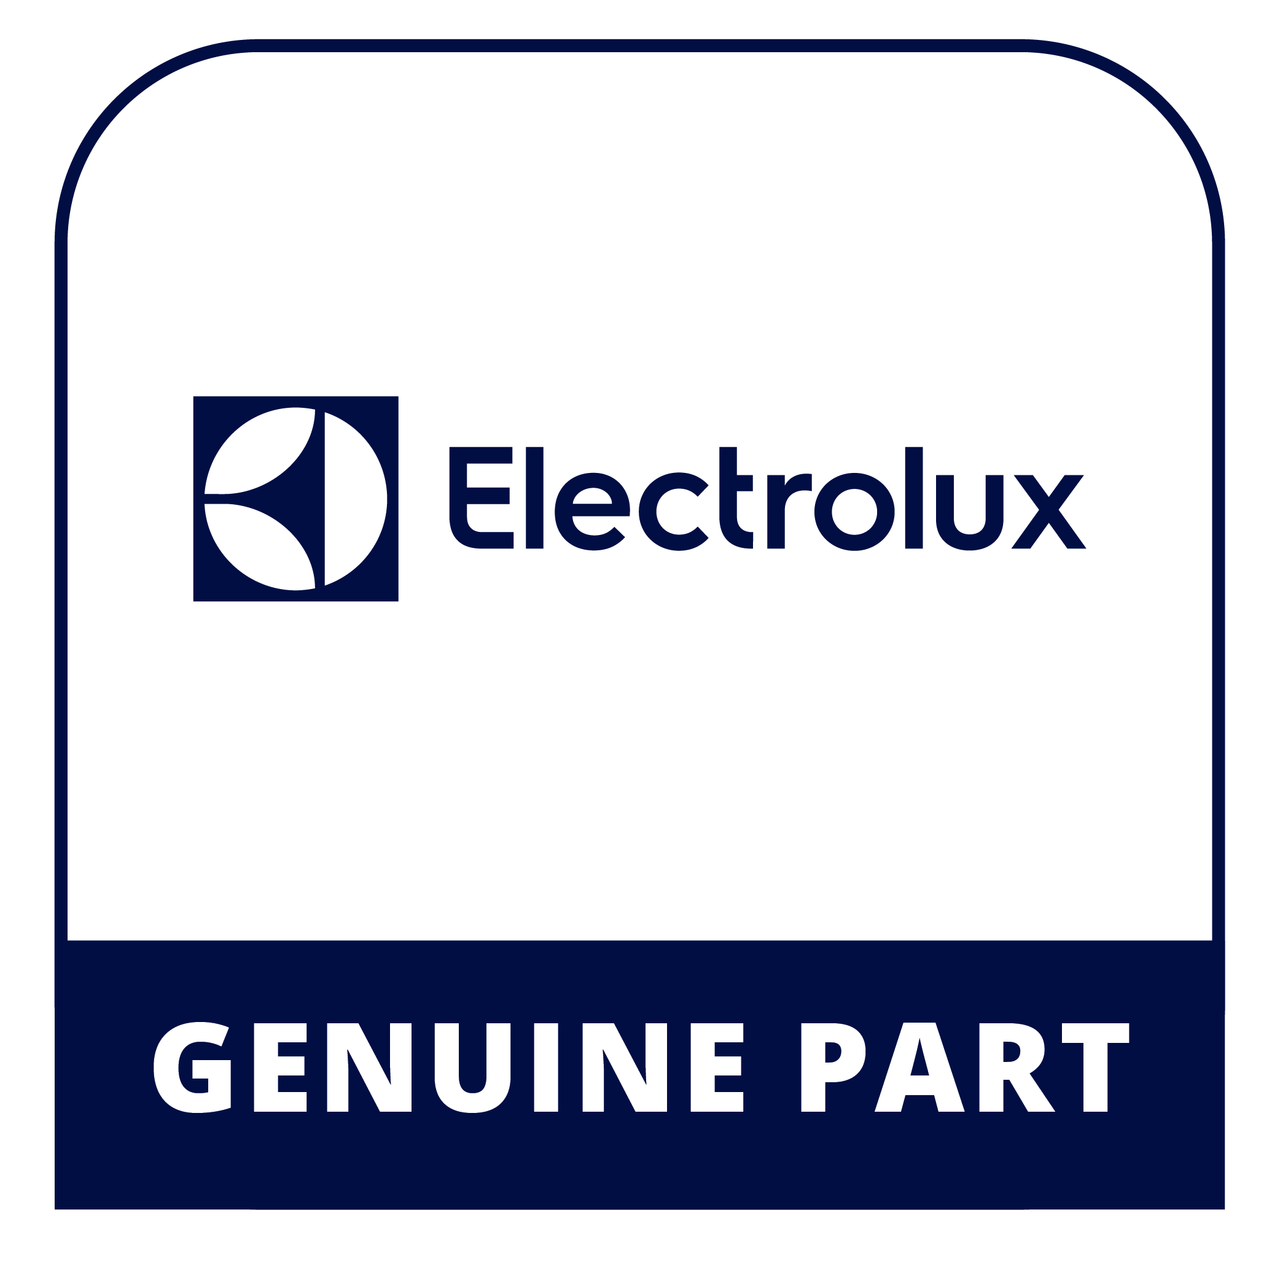 Frigidaire - Electrolux 5303325990 - Support-Door Rack - Genuine Electrolux Part